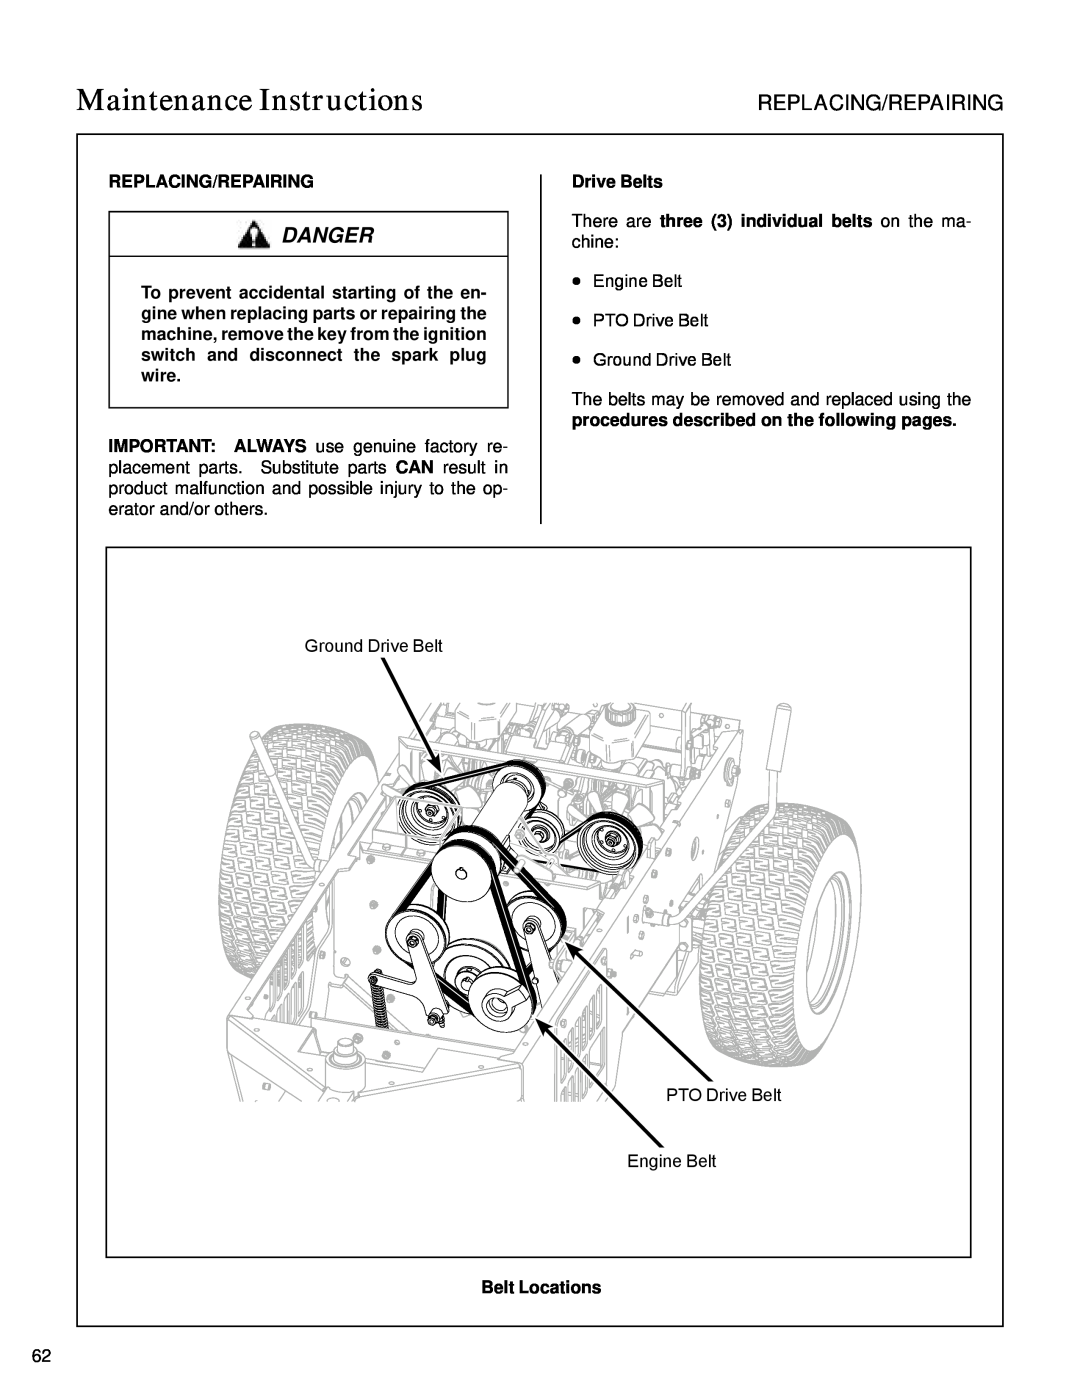 Walker S14 manual Replacing/Repairing, Belt Locations, Maintenance Instructions, Danger, Drive Belts 